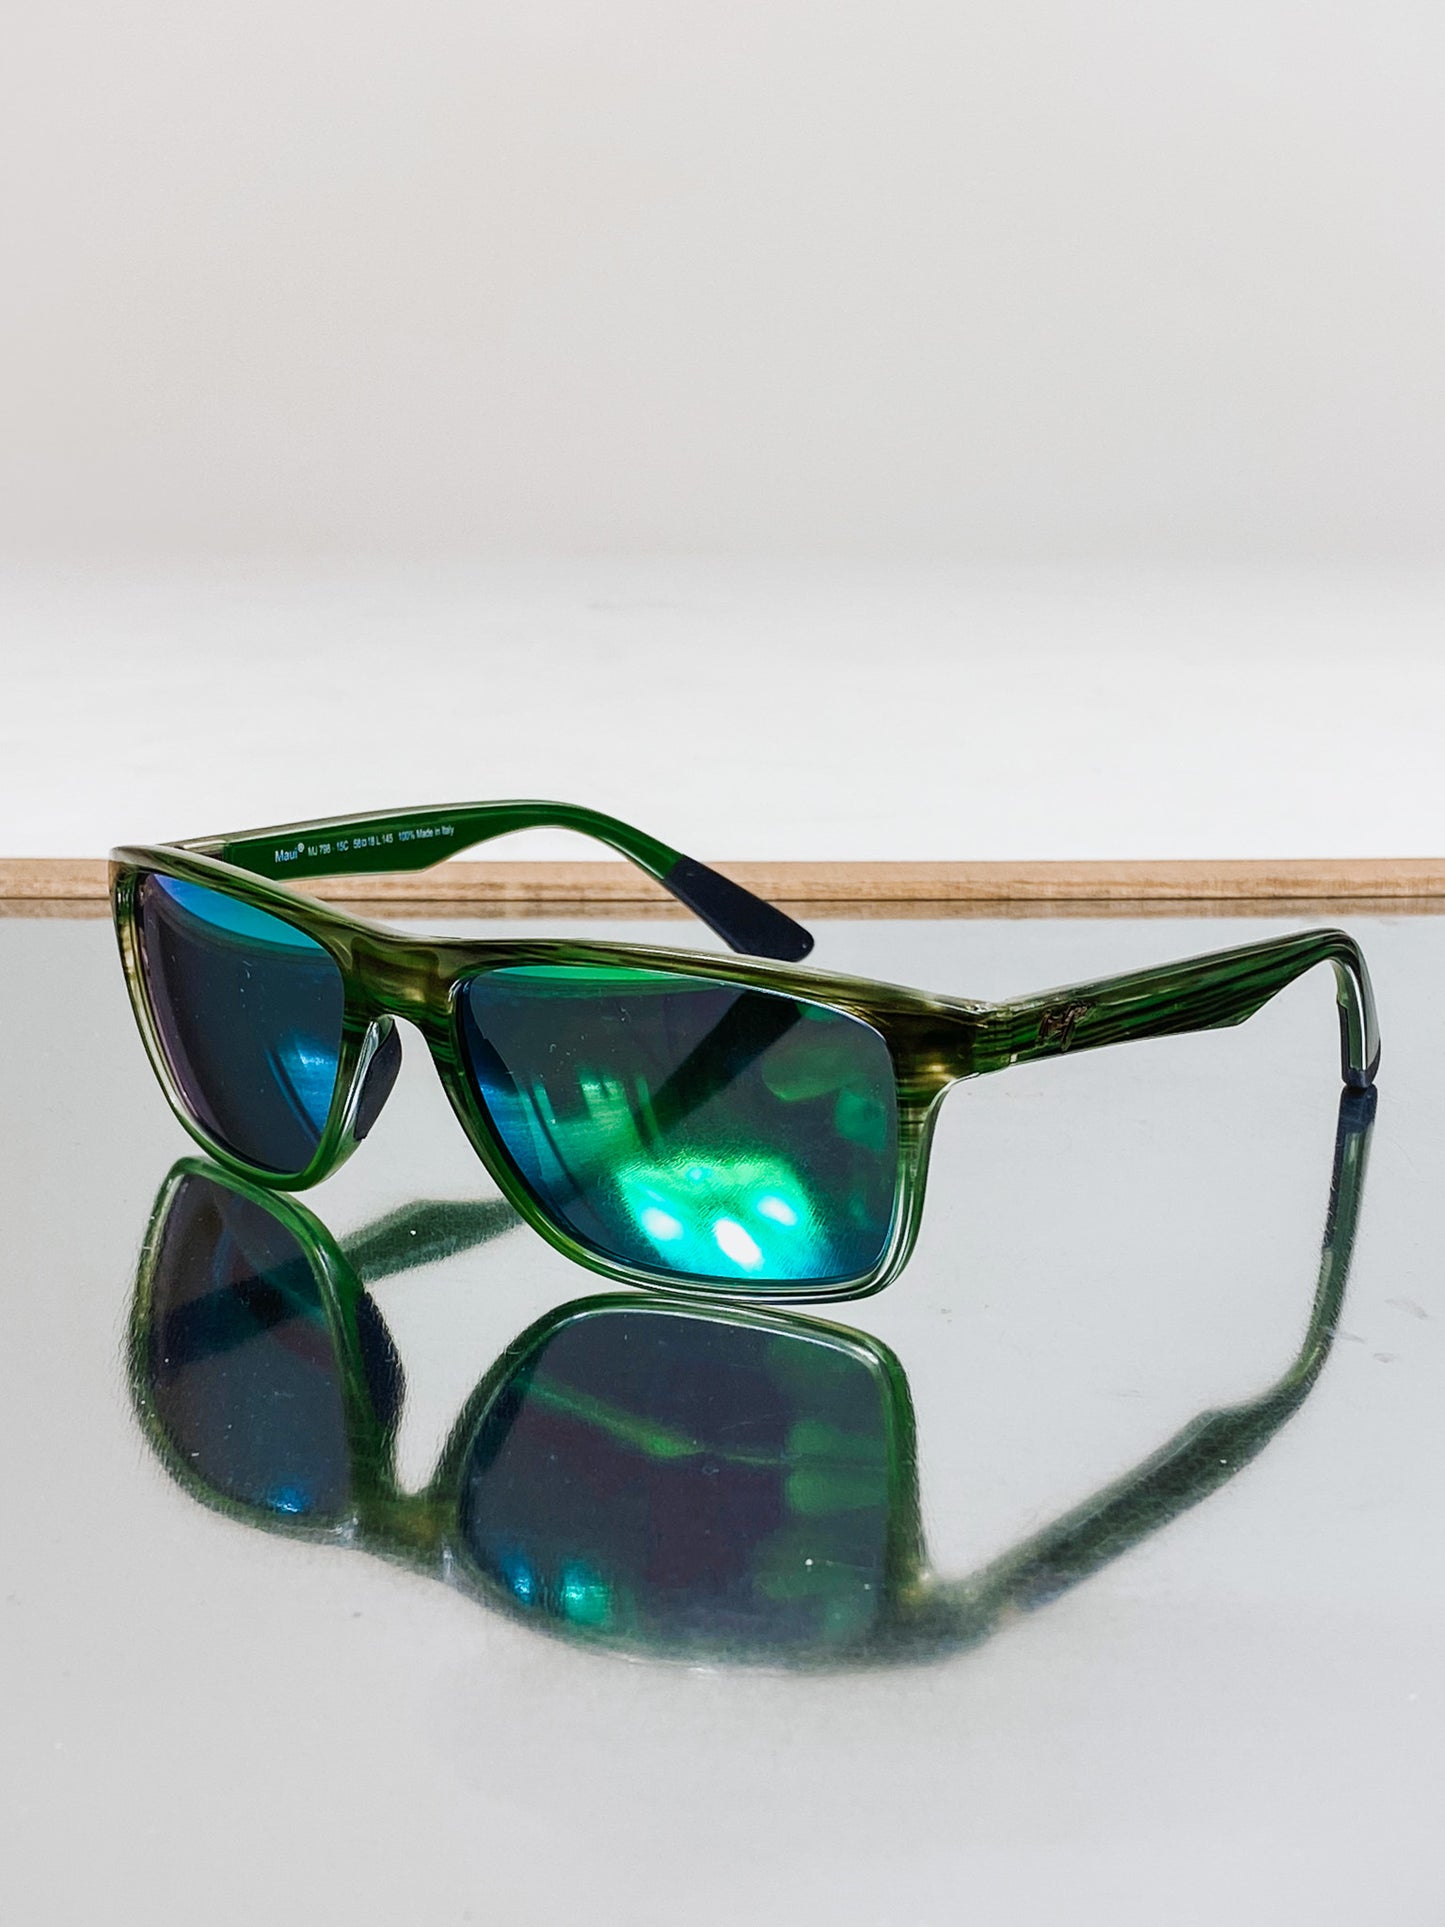 Maui Jim unisex Onshore Polarized Rectangular Sunglasses, 58mm Olive Stripe Fade/Maui Green Gradient Polarized